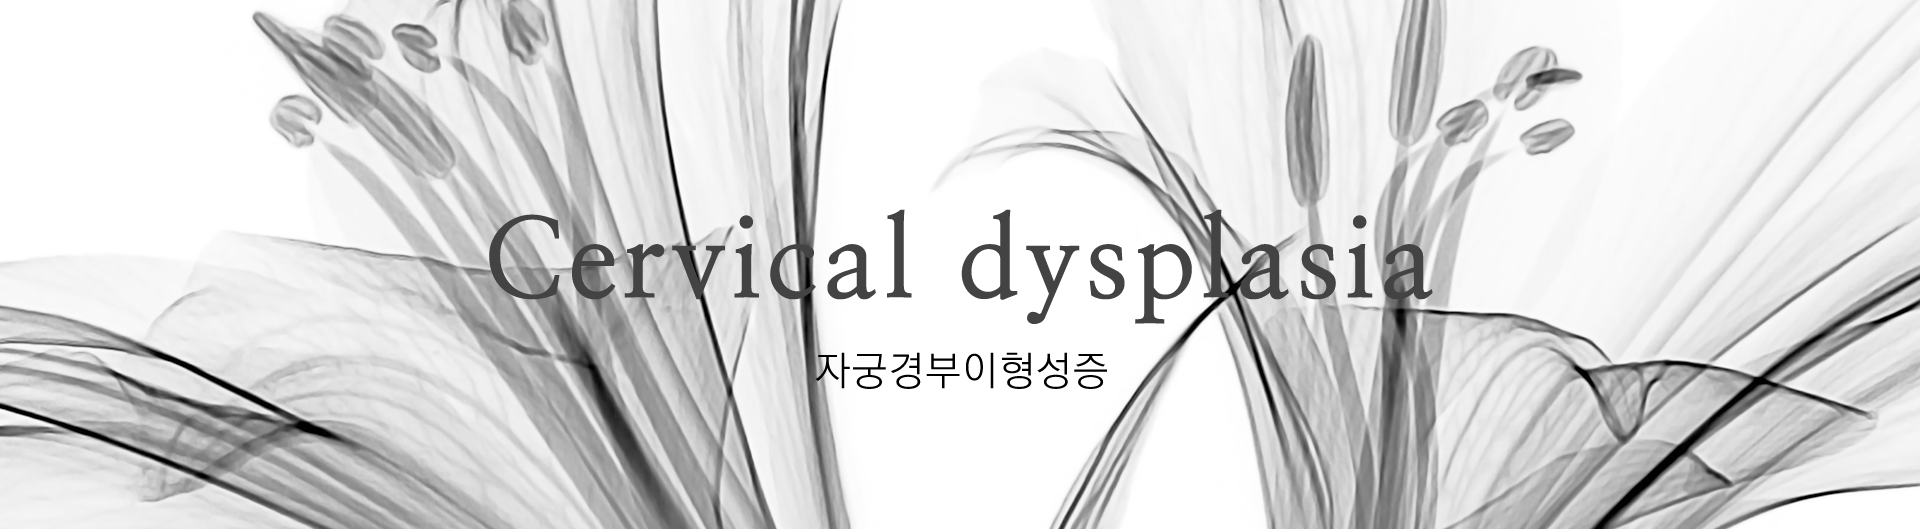 Cervical dysplasia, 자궁경부이형성증